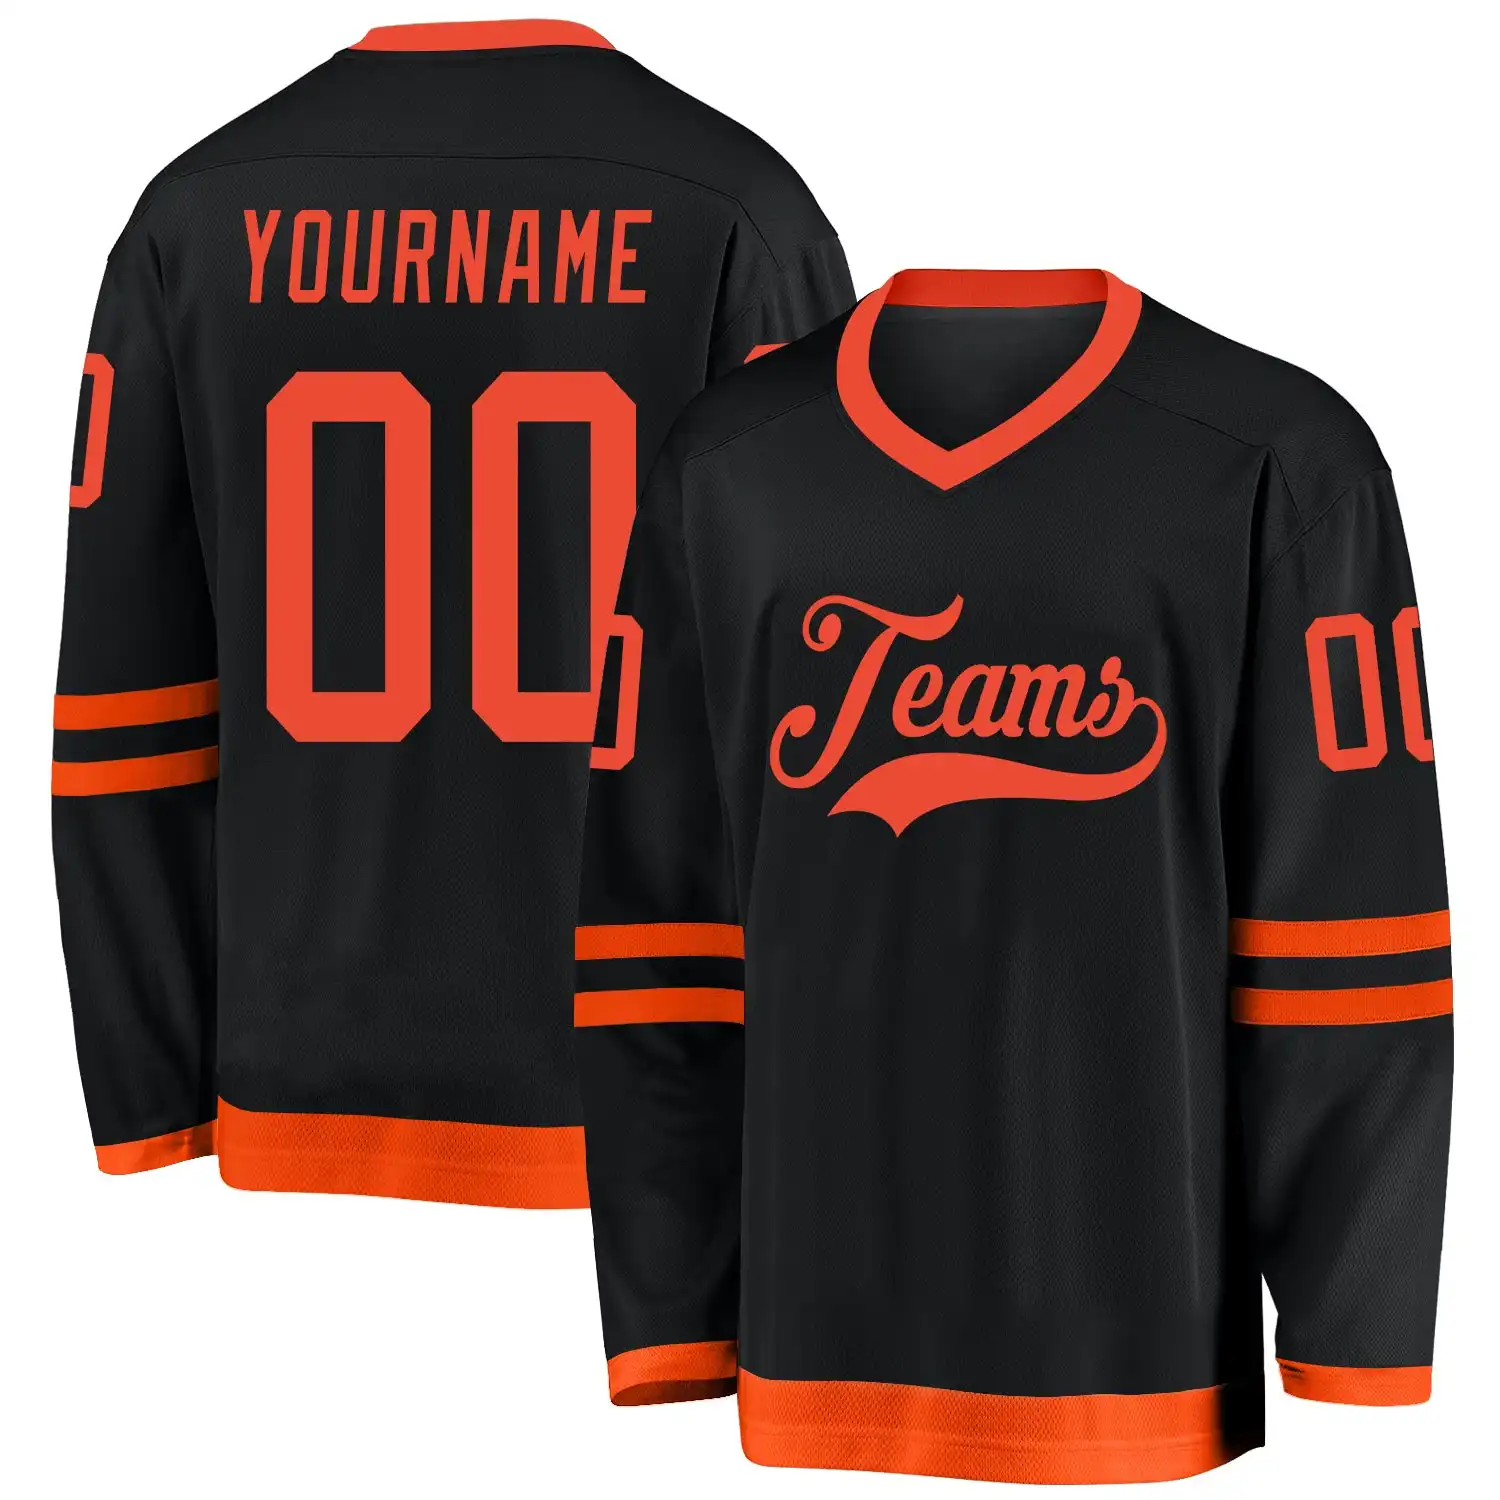 Stitched And Print Black Orange Hockey Jersey Custom